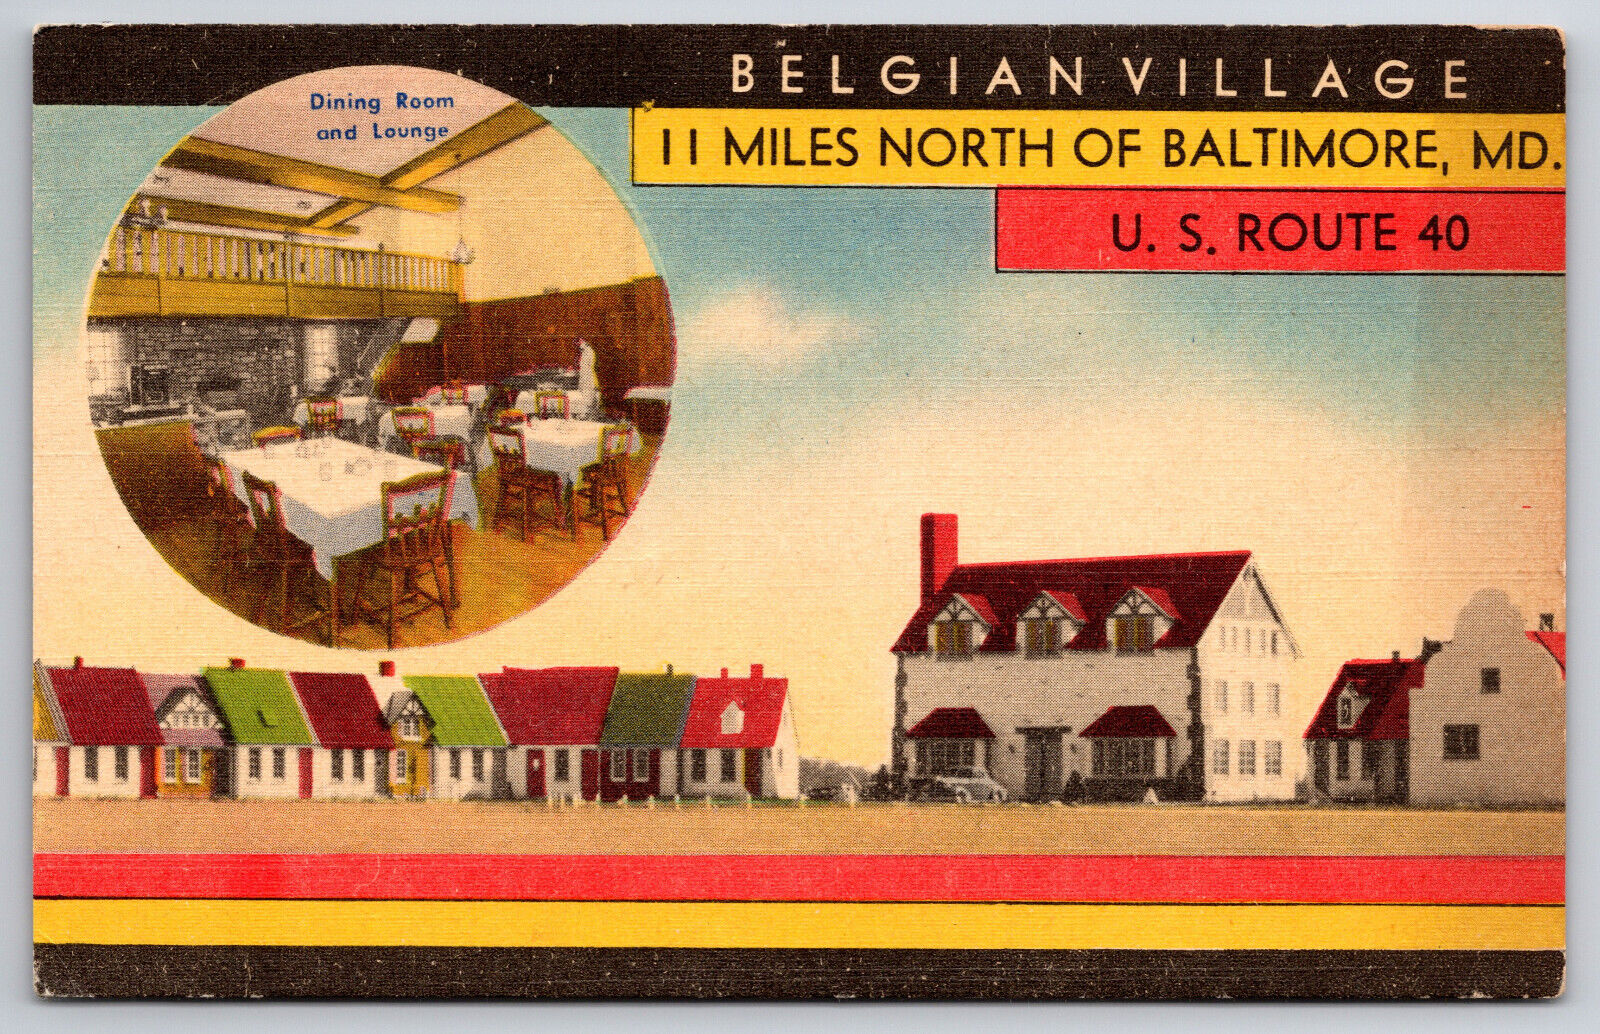 Vintage Postcard Belguim Village 11 Miles North of Baltimore MD. U.S. Route 40